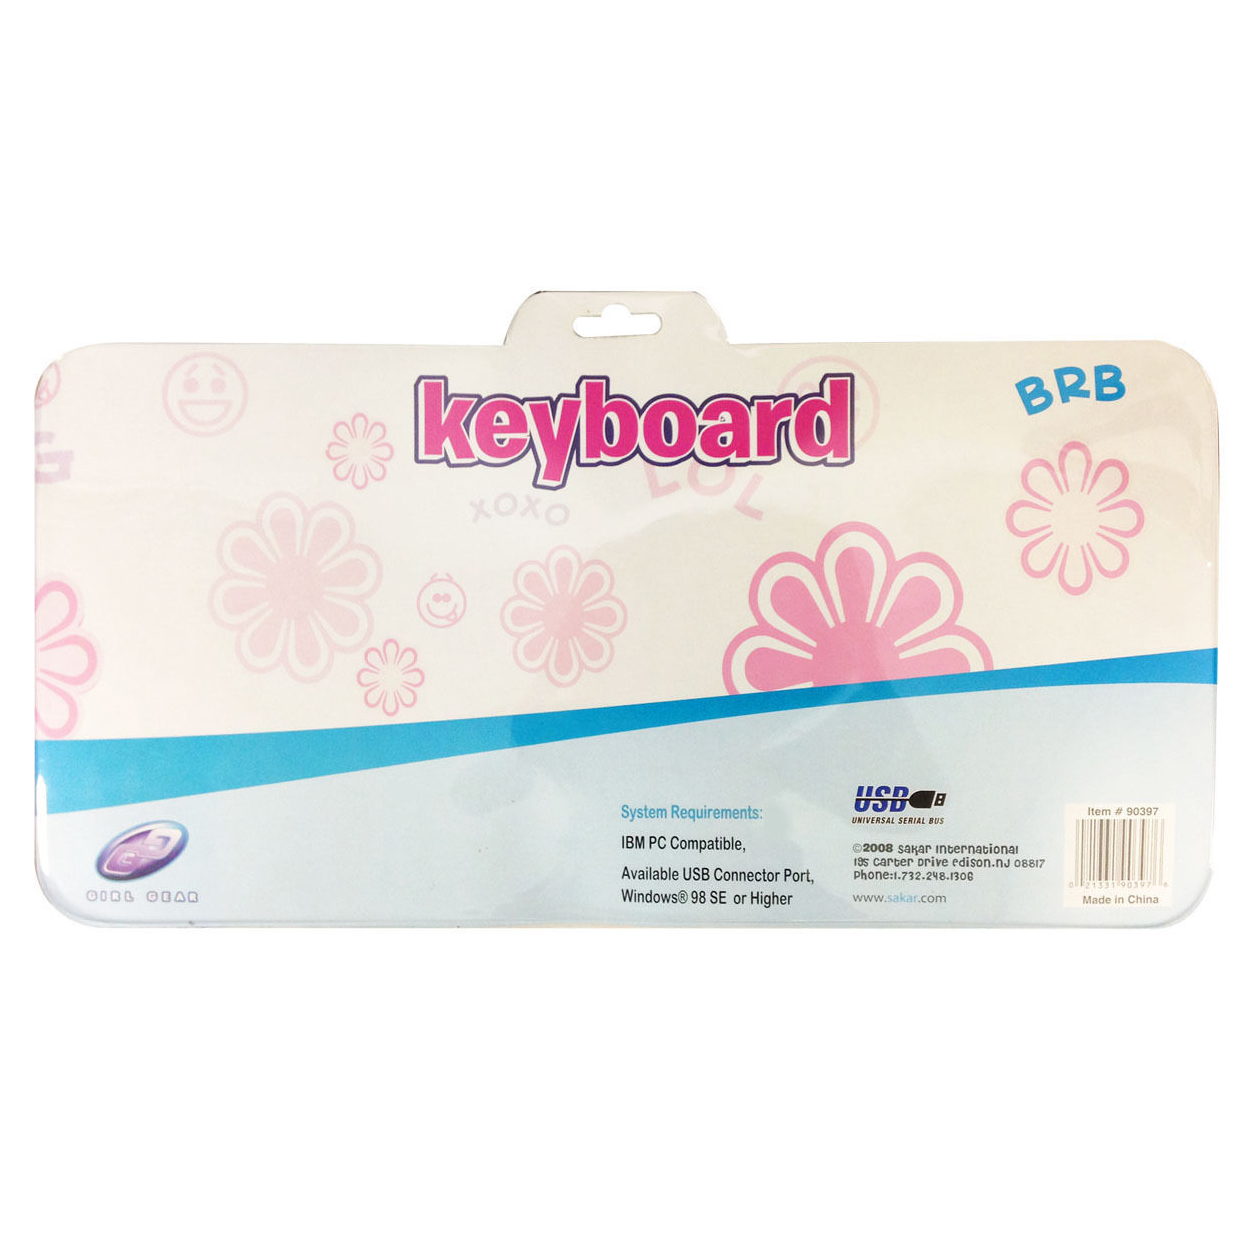 Girl Gear Pink Daisy USB Compact Keyboard